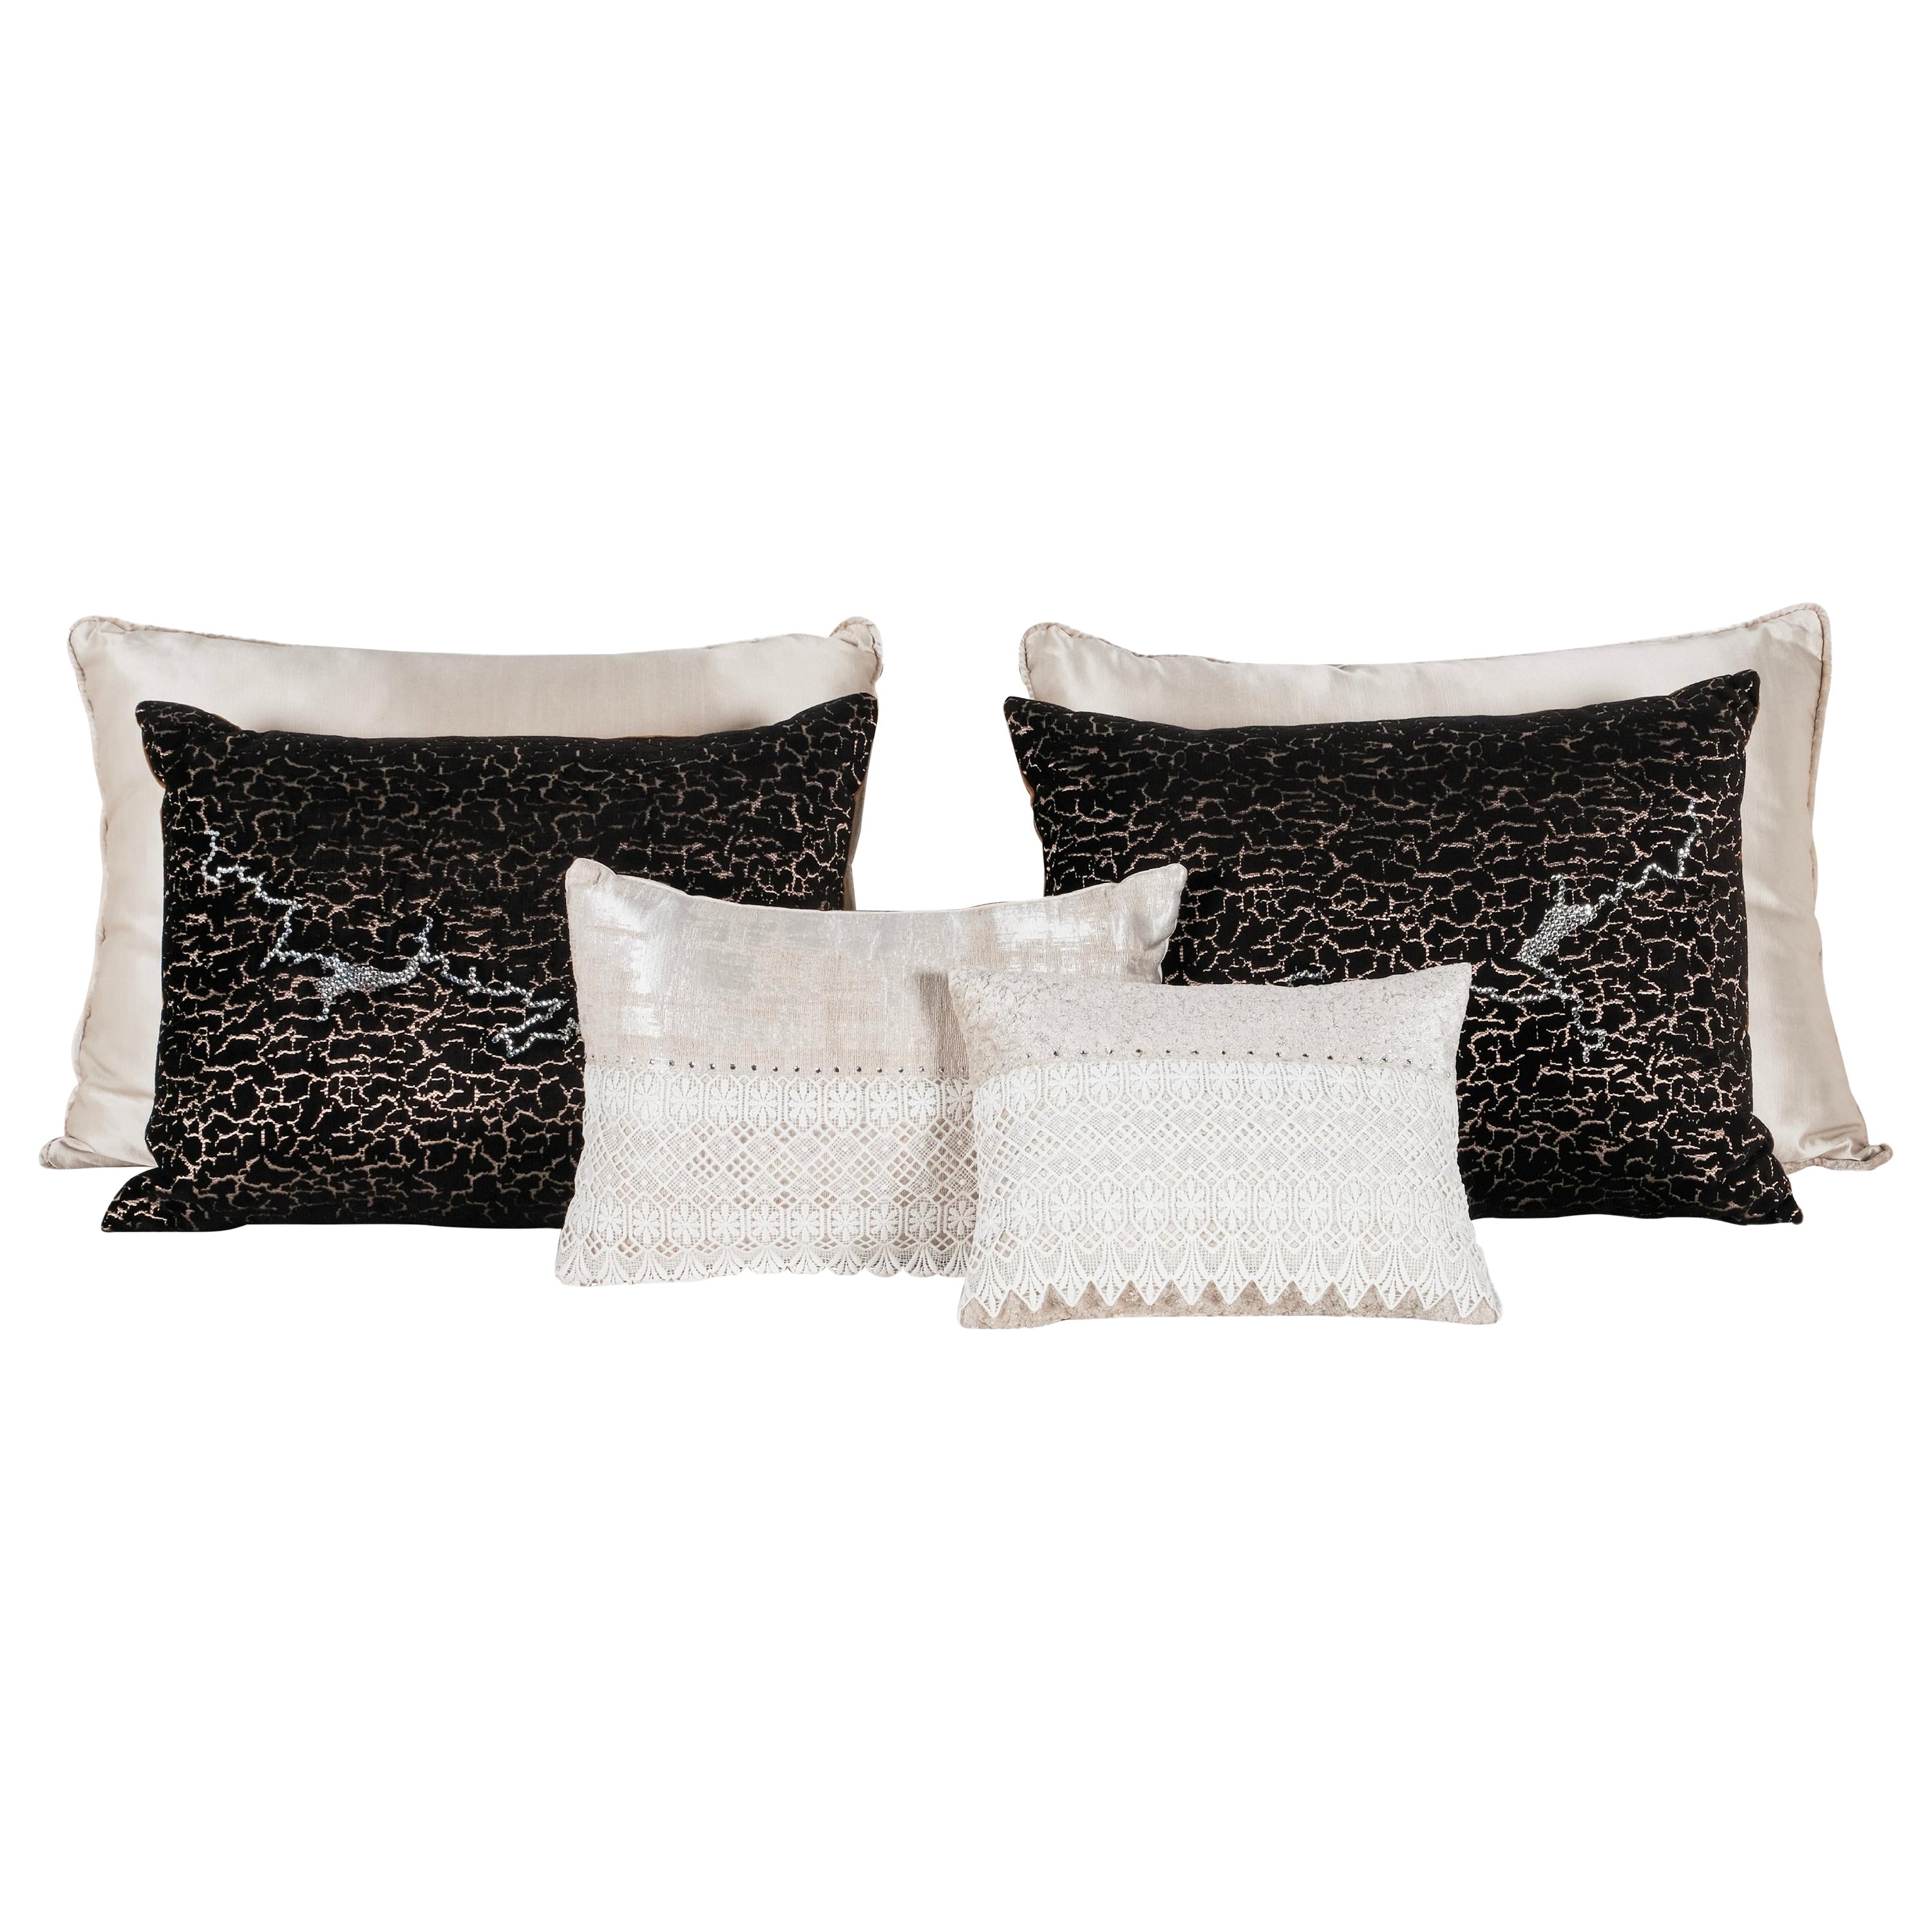 Set of 6 Decorative Pillows Cream Black and White Lace Swarovski Lusitanus